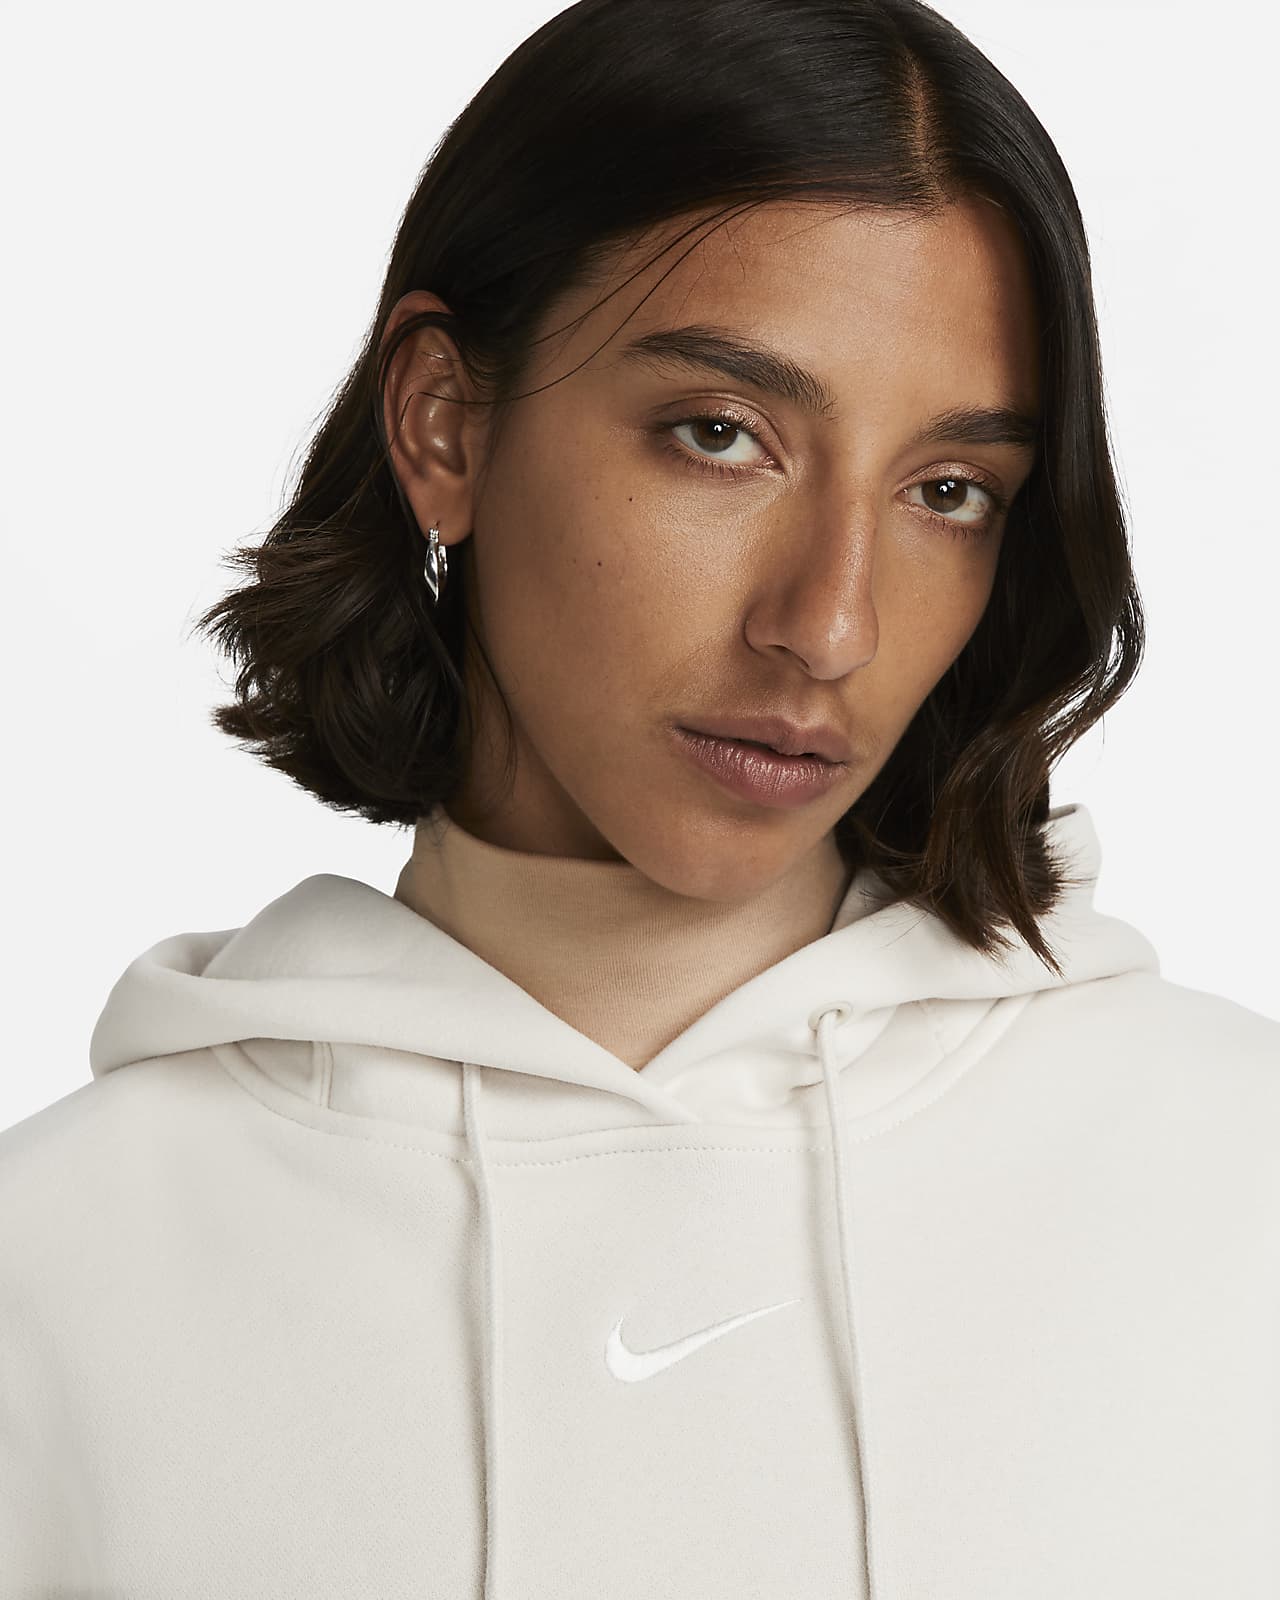 Sweat a Capuche Court Oversize a Motif Nike Sportswear Club Fleece